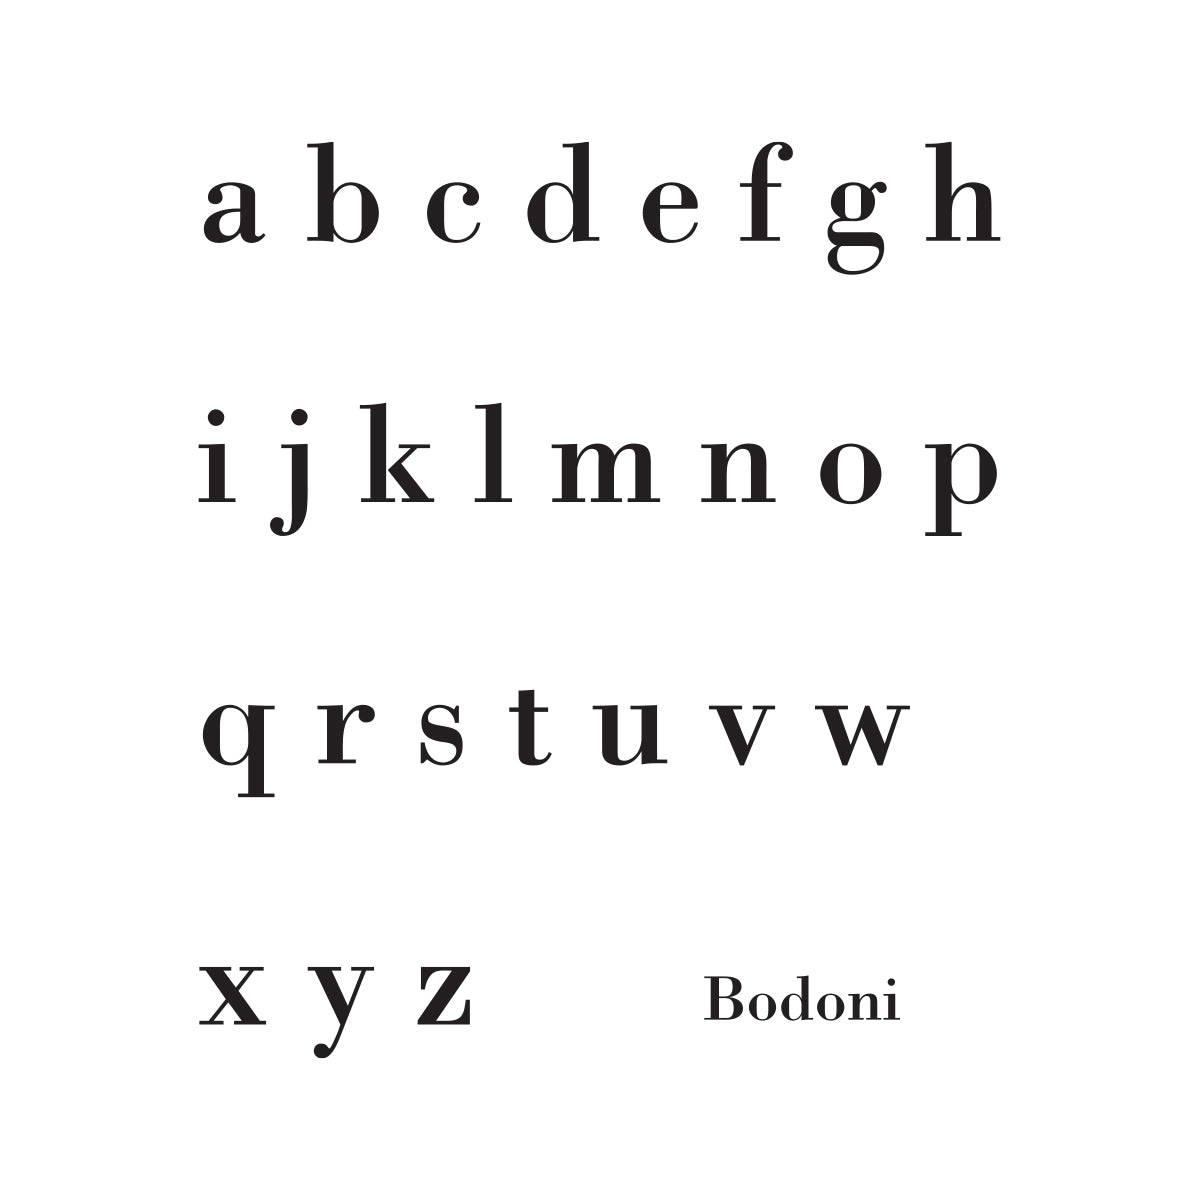 Bodoni Written Number-2 Lines.